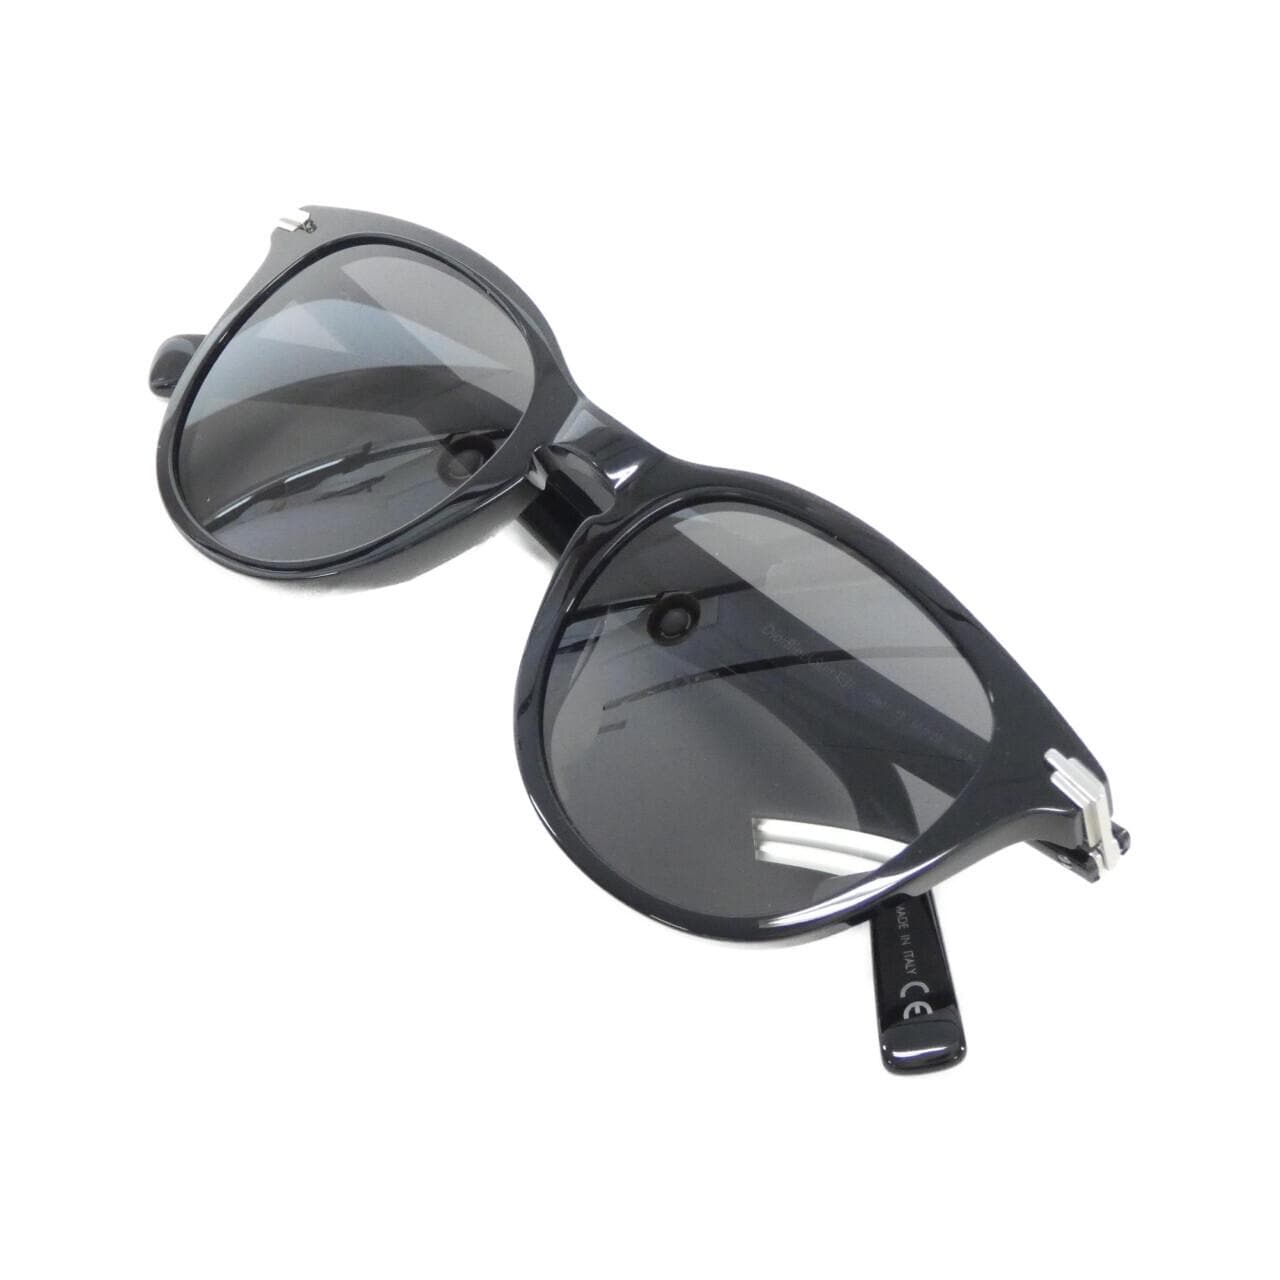 [BRAND NEW] Christian DIOR BLACKSUIT R3I Sunglasses